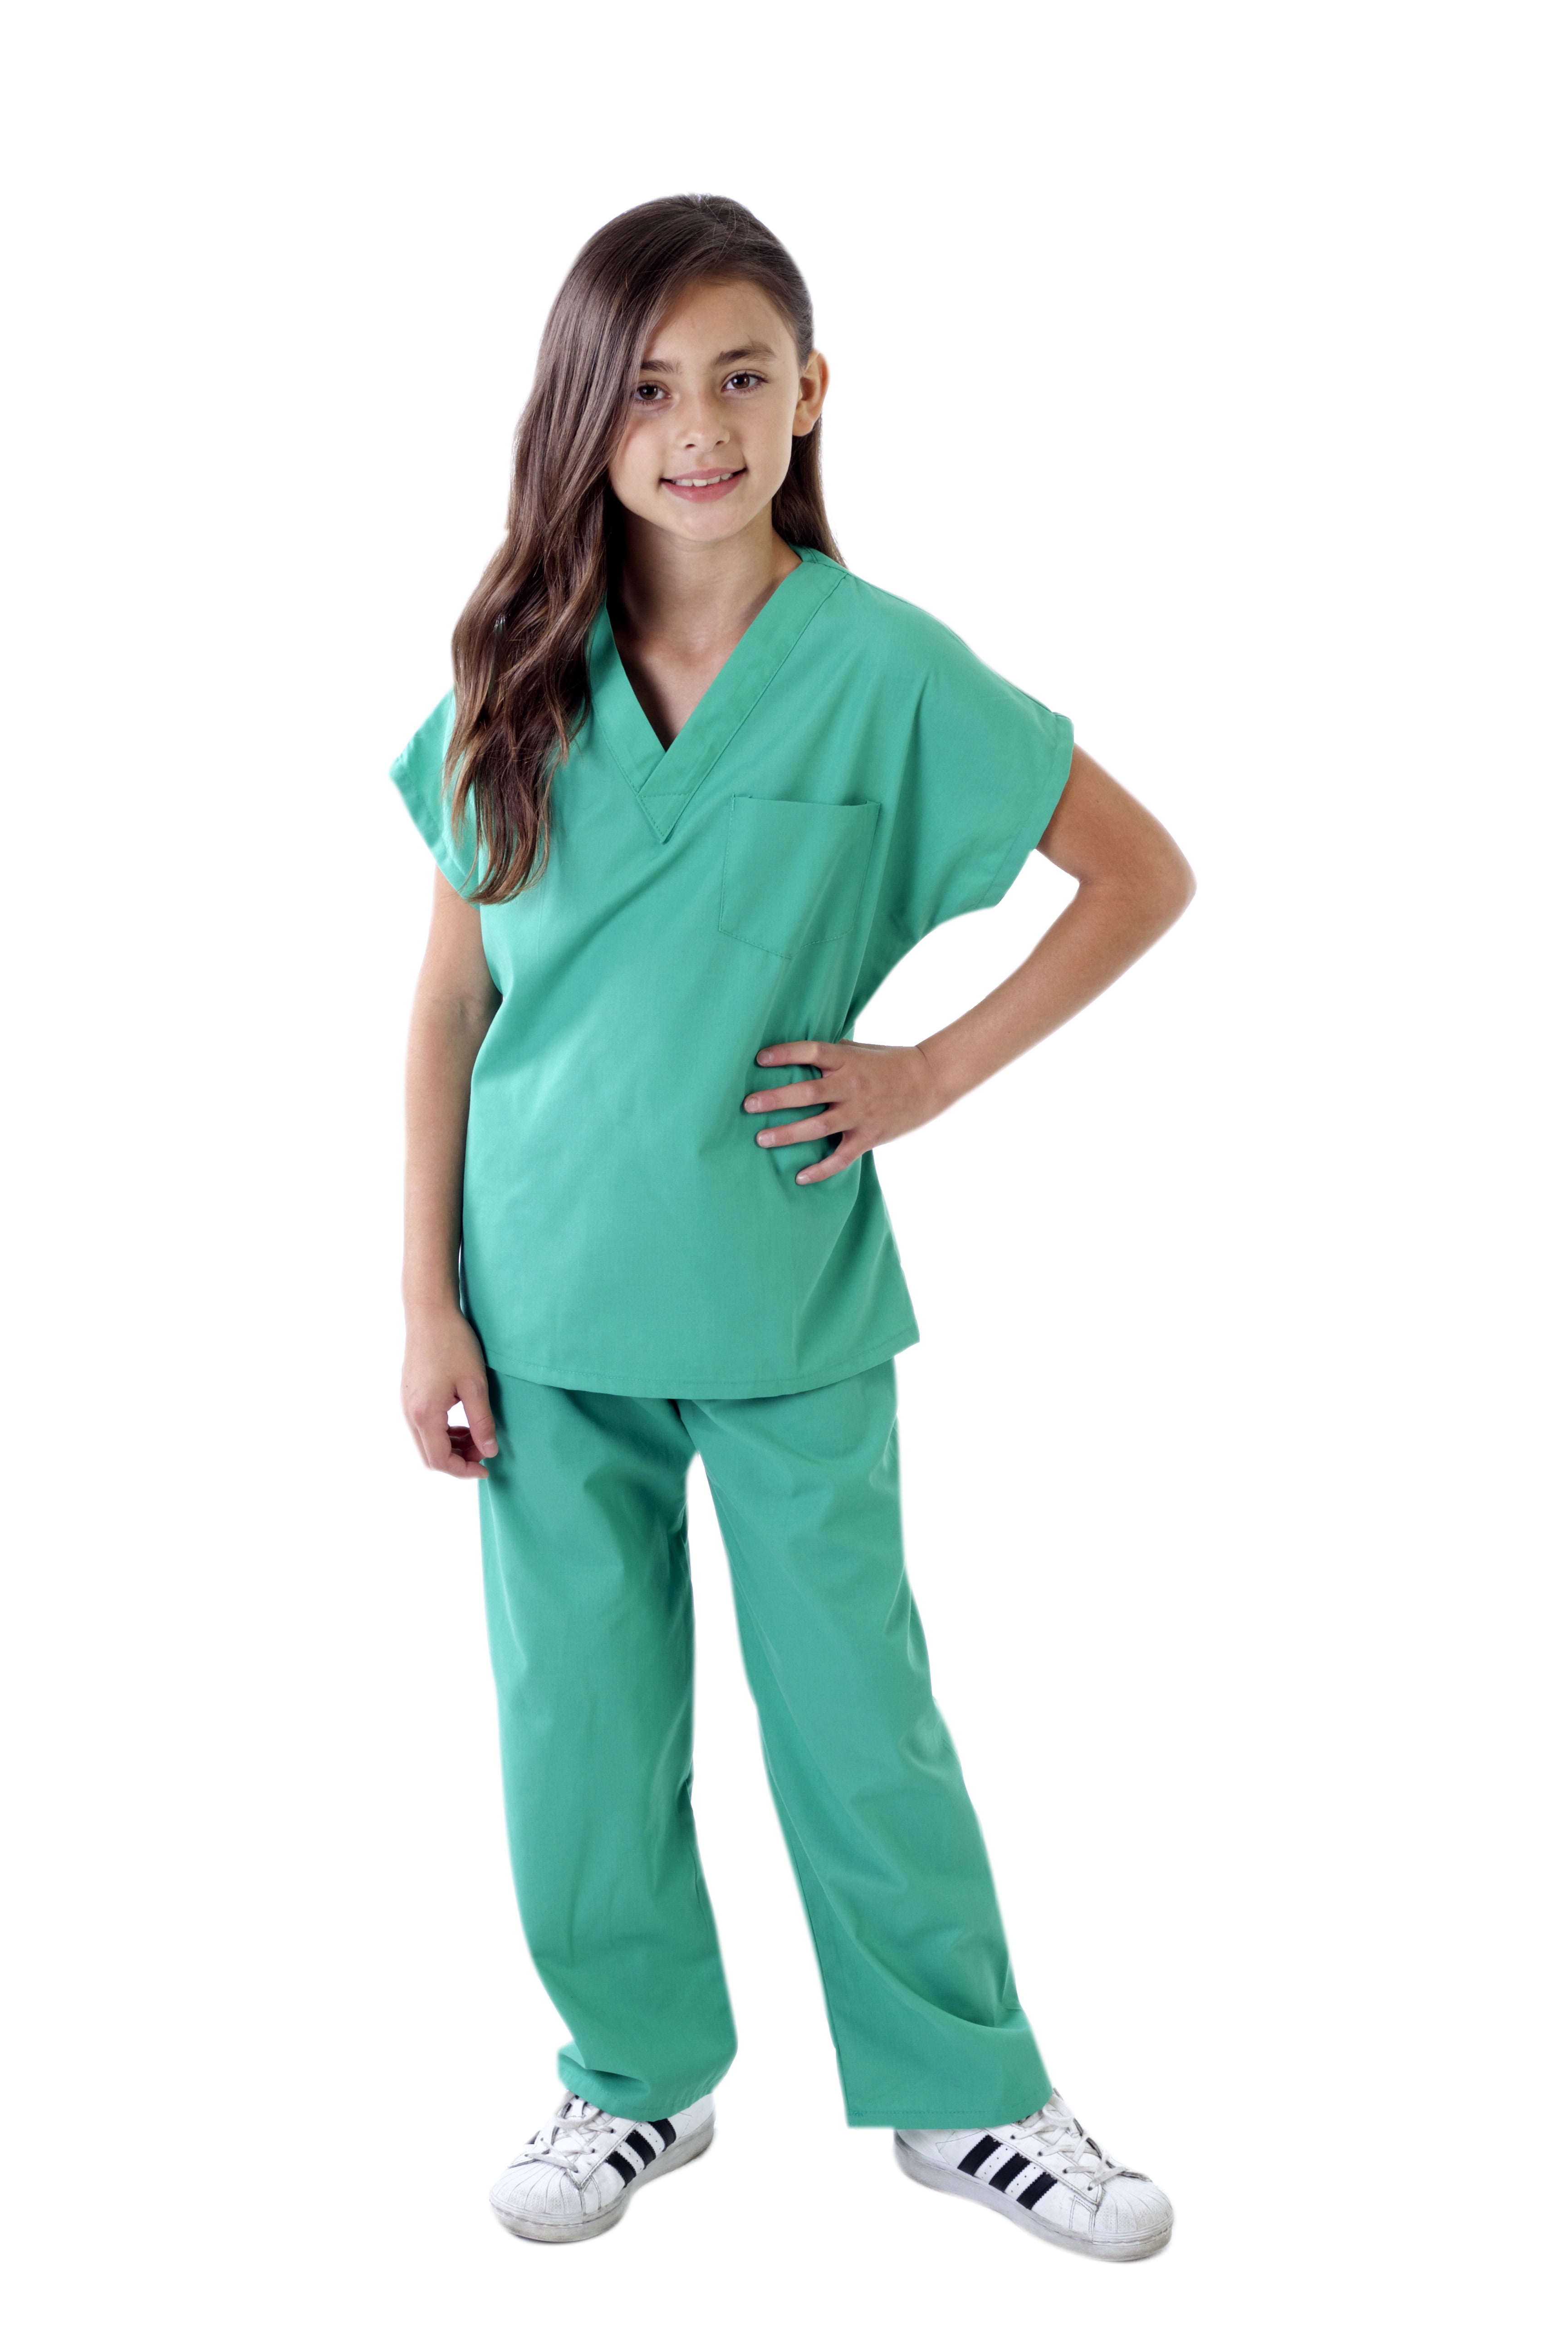 M&M Scrubs - Kids Scrubs Super Soft Children Scrub Set Kids Doctor Dress up  